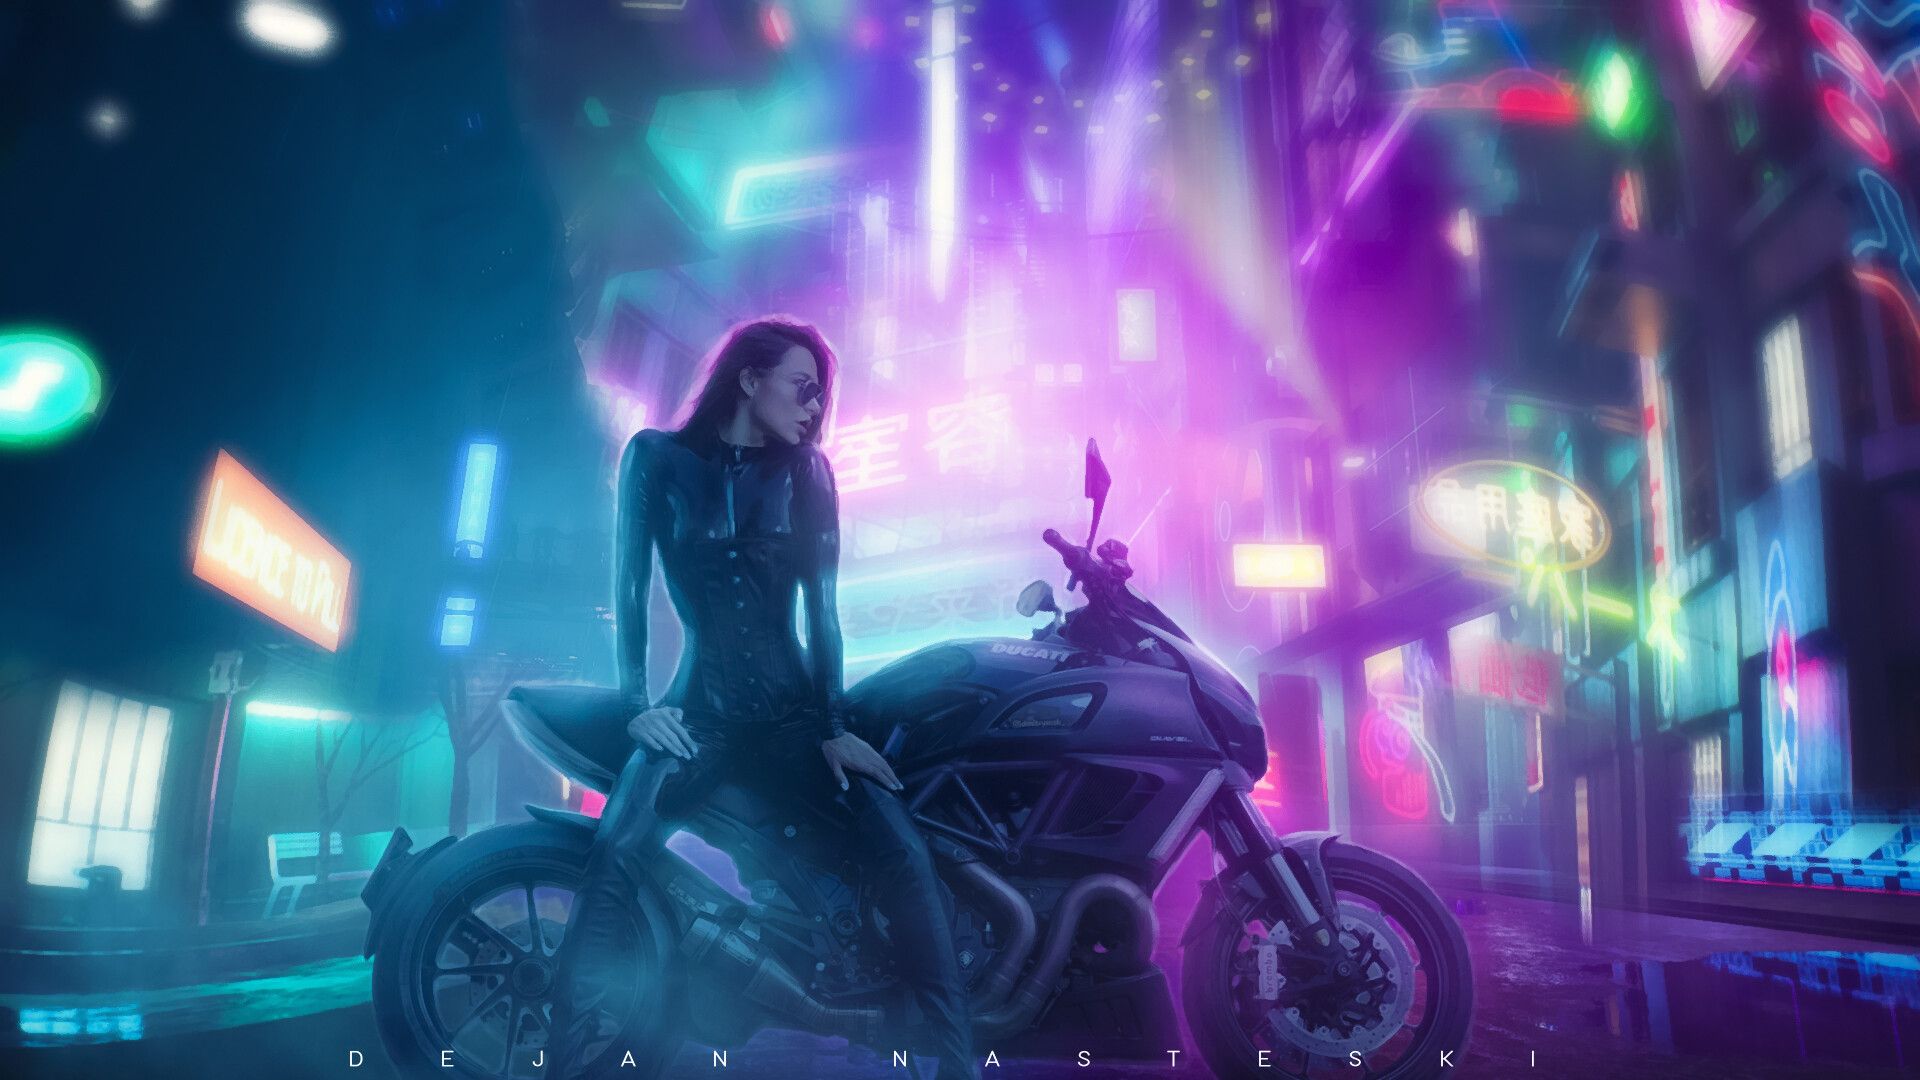 Cyberpunk Girl Futuristic Motorcycle Wallpapers ...